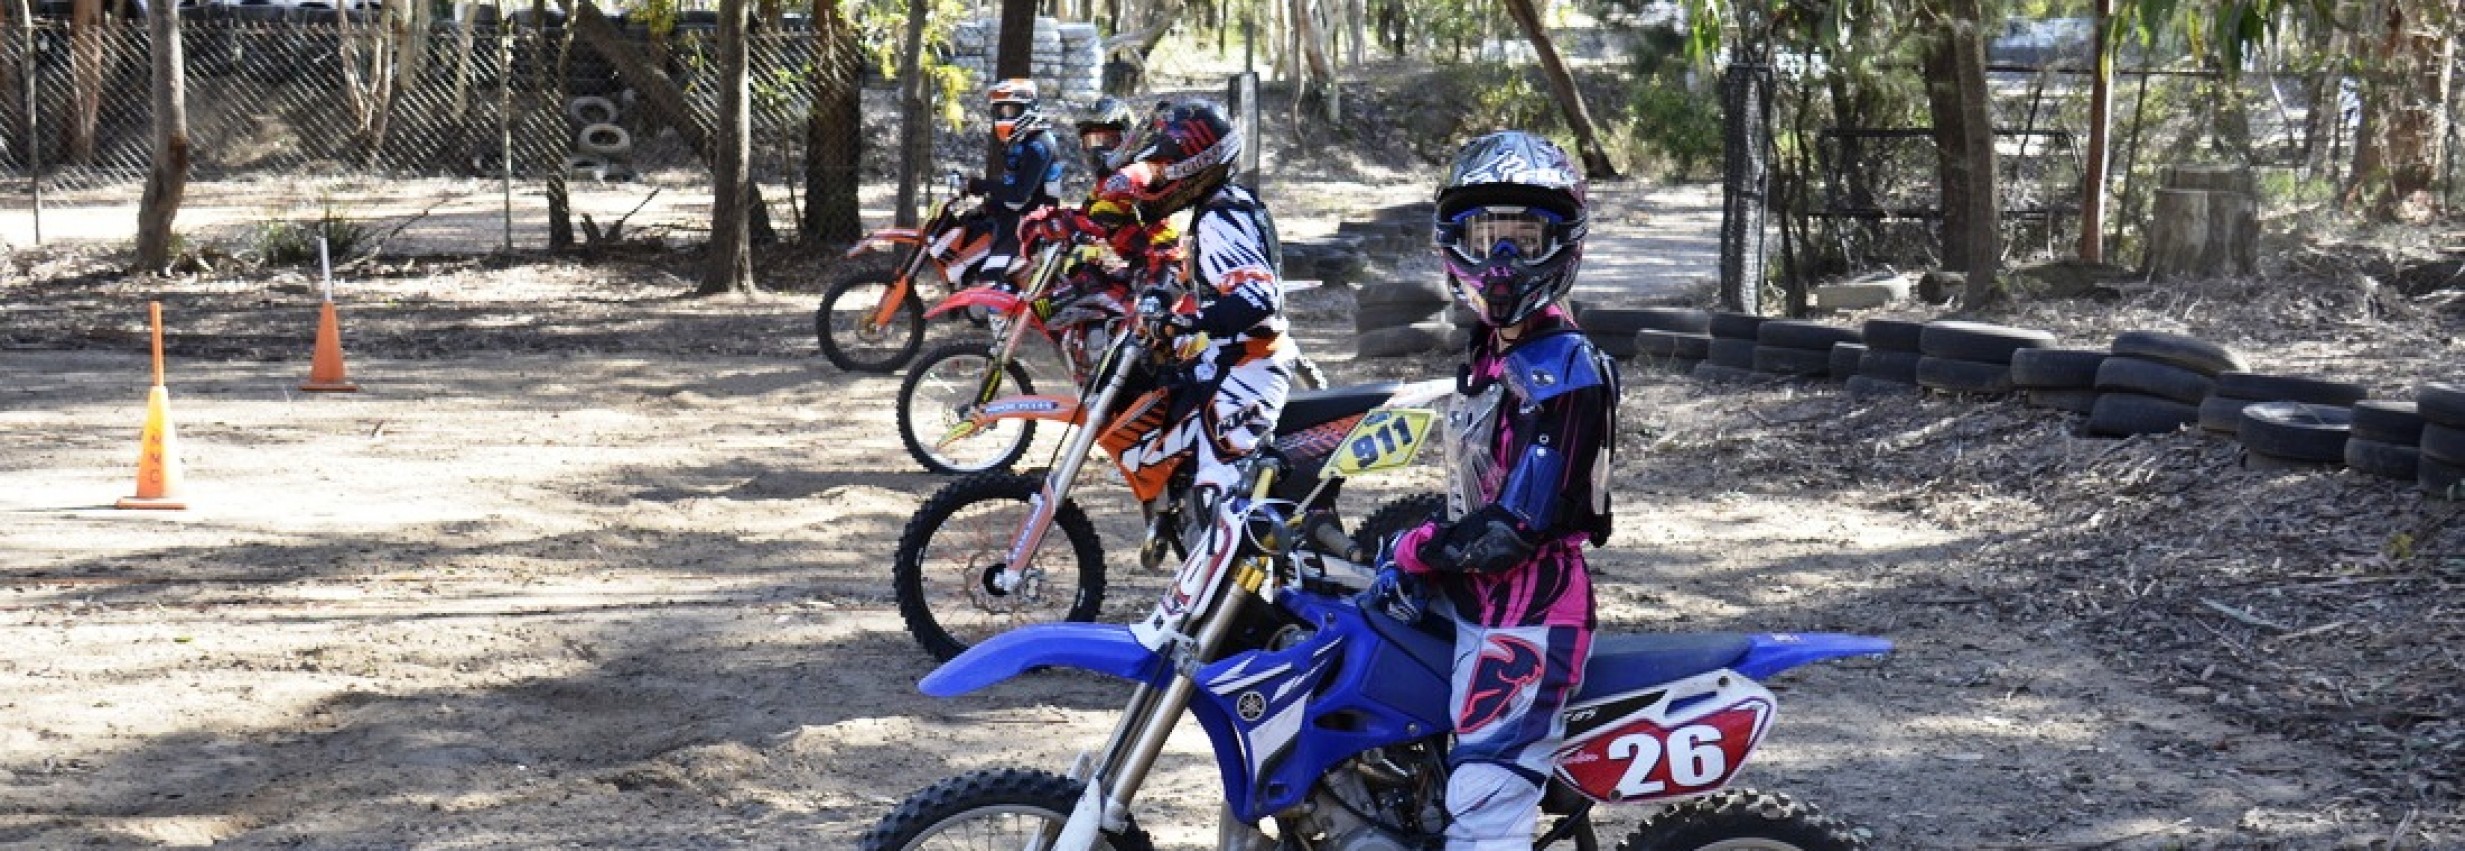 Hornsby Junior Dirt Bike Club